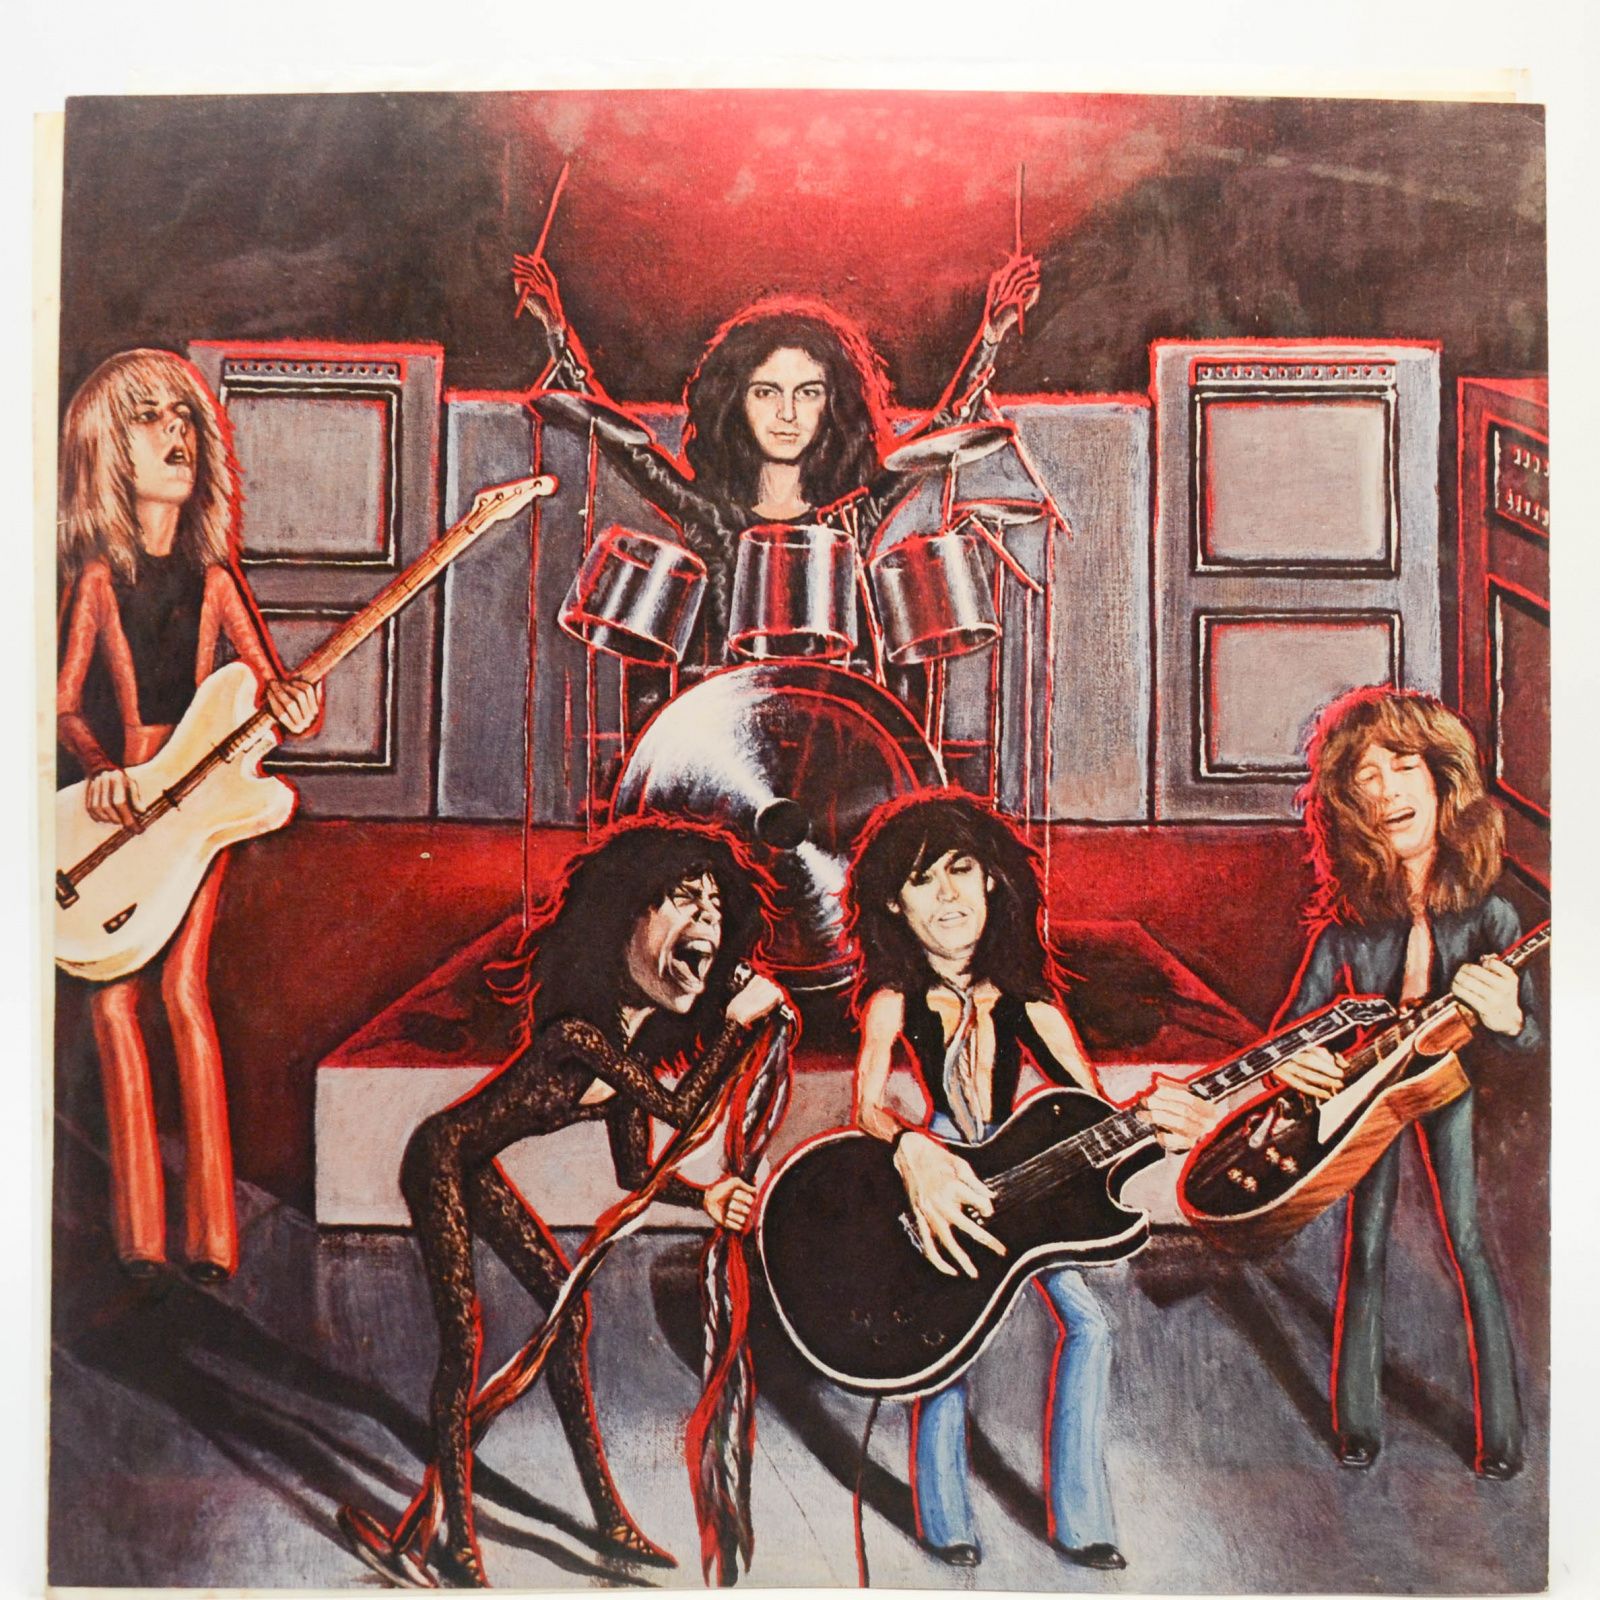 Aerosmith — "Rocks", 1976